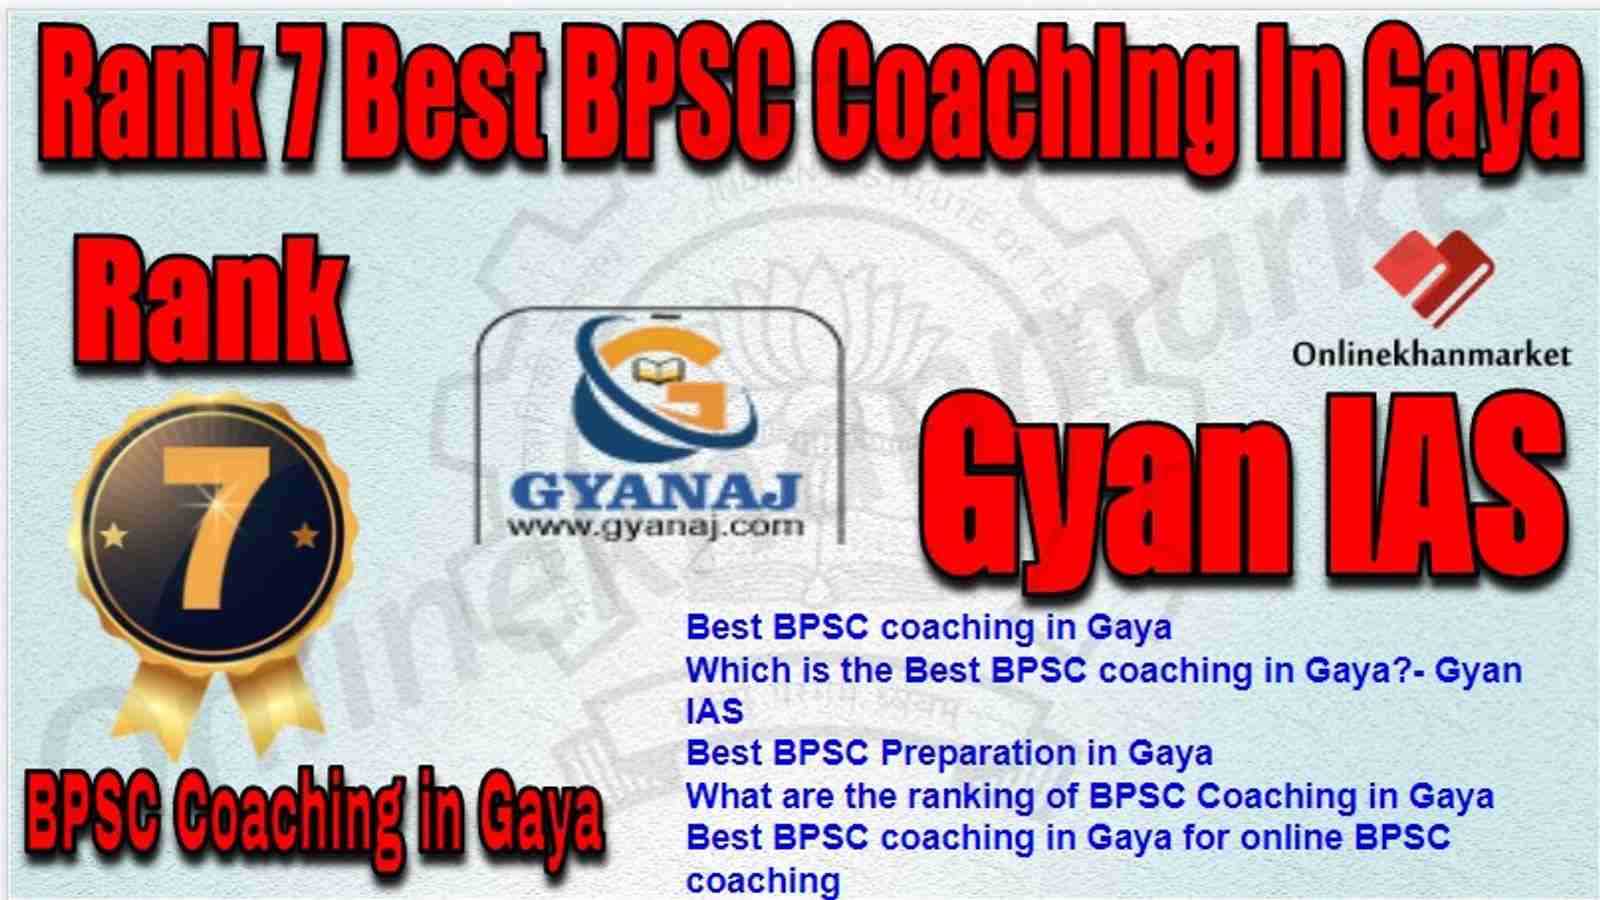 Rank 7 Best BPSC Coaching in gaya